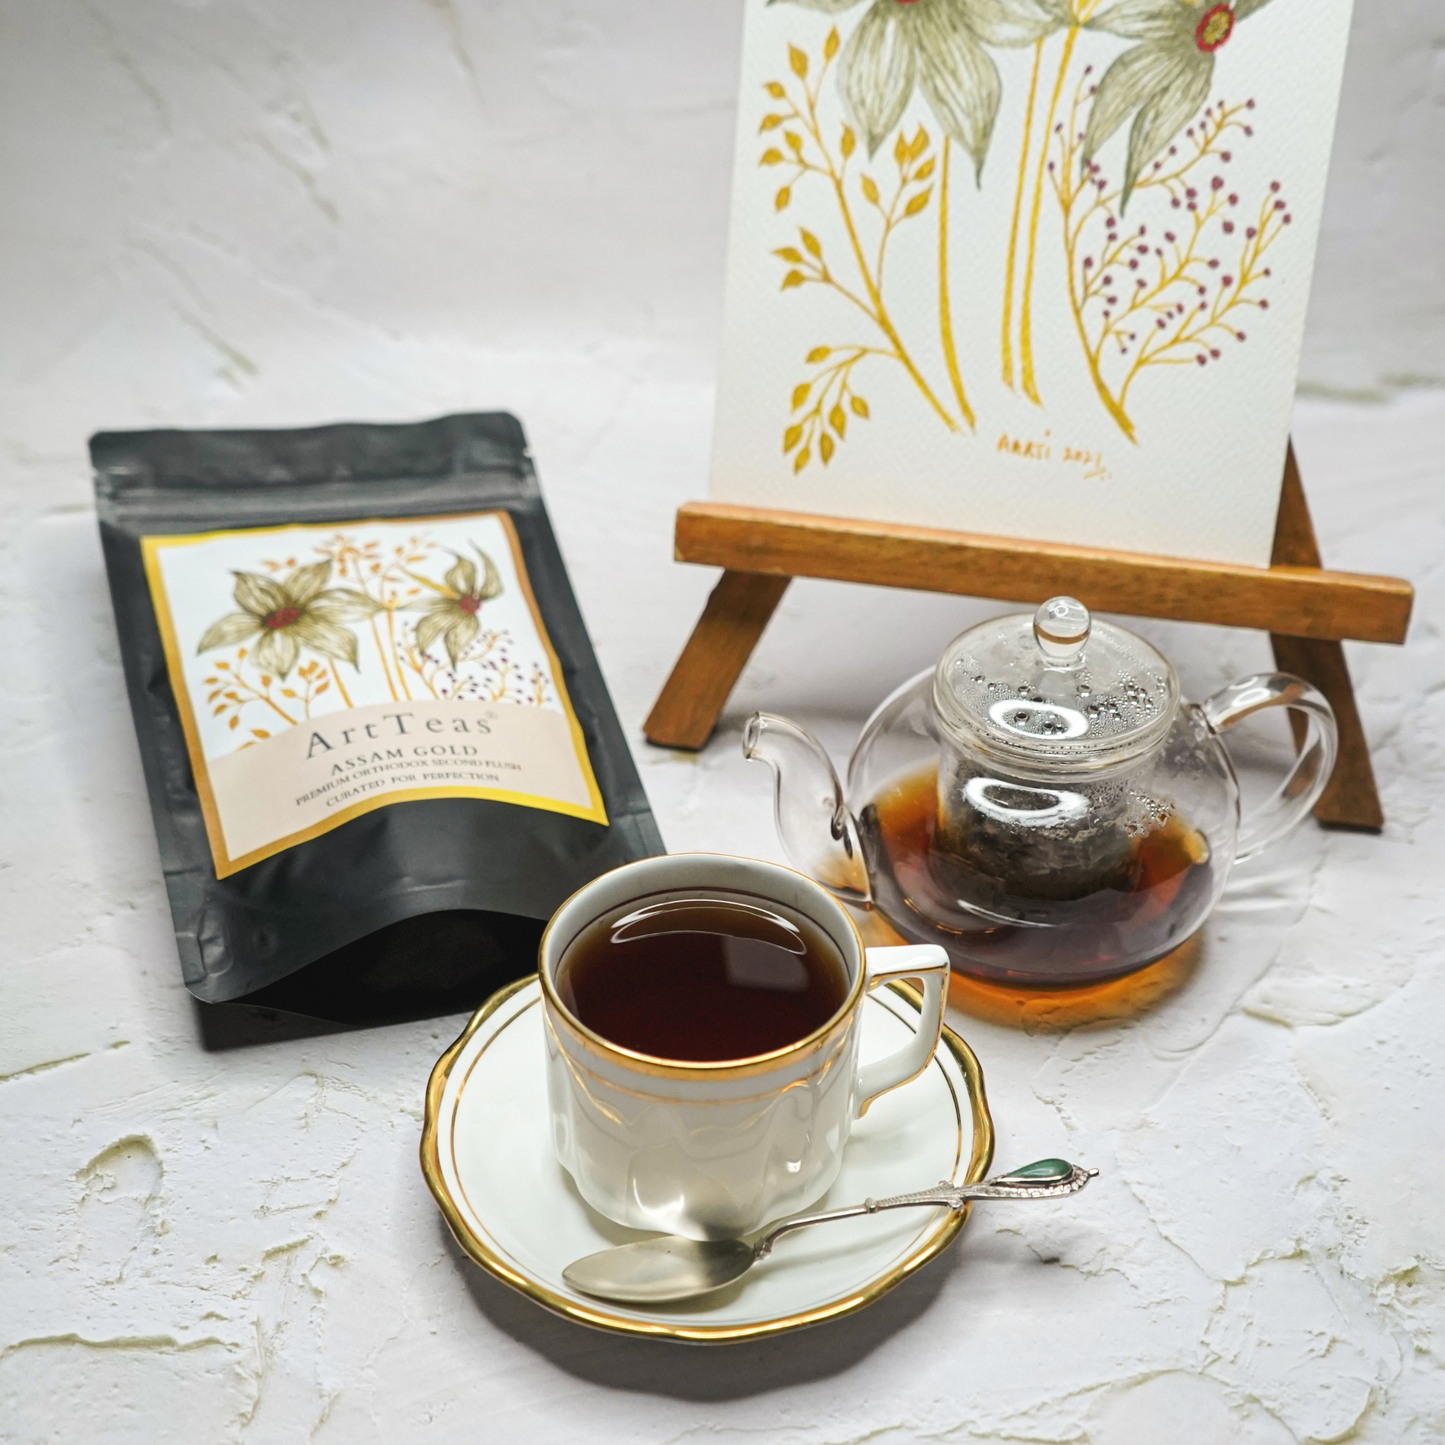 Buy Assam Gold Black Orthodox Tea Online - ChaiExperience